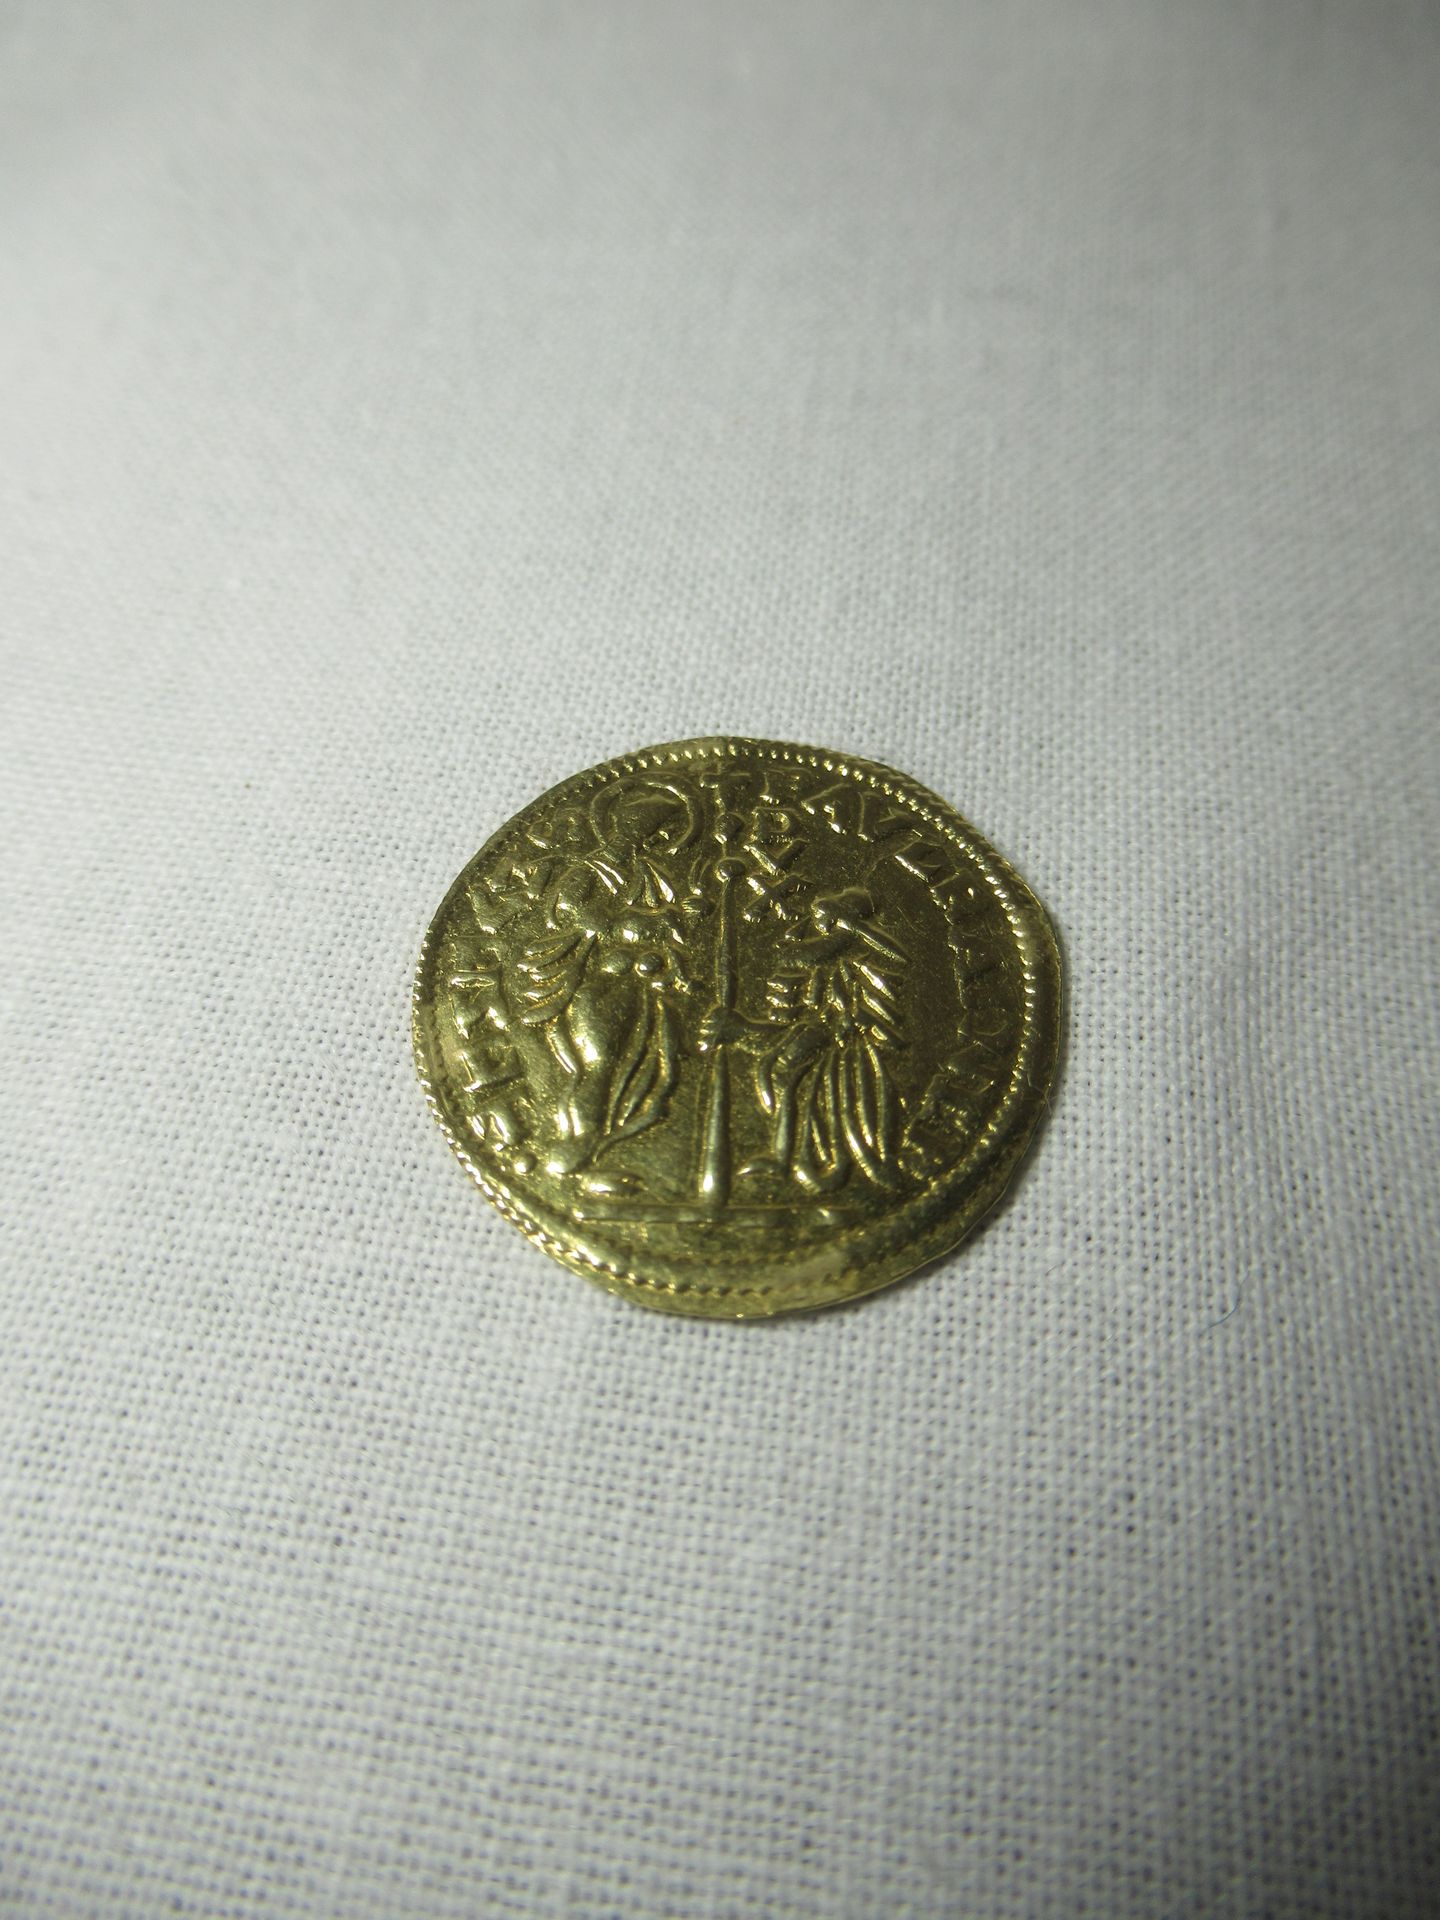 Null Monnaie médiévale en or. Poids : 2,64 g